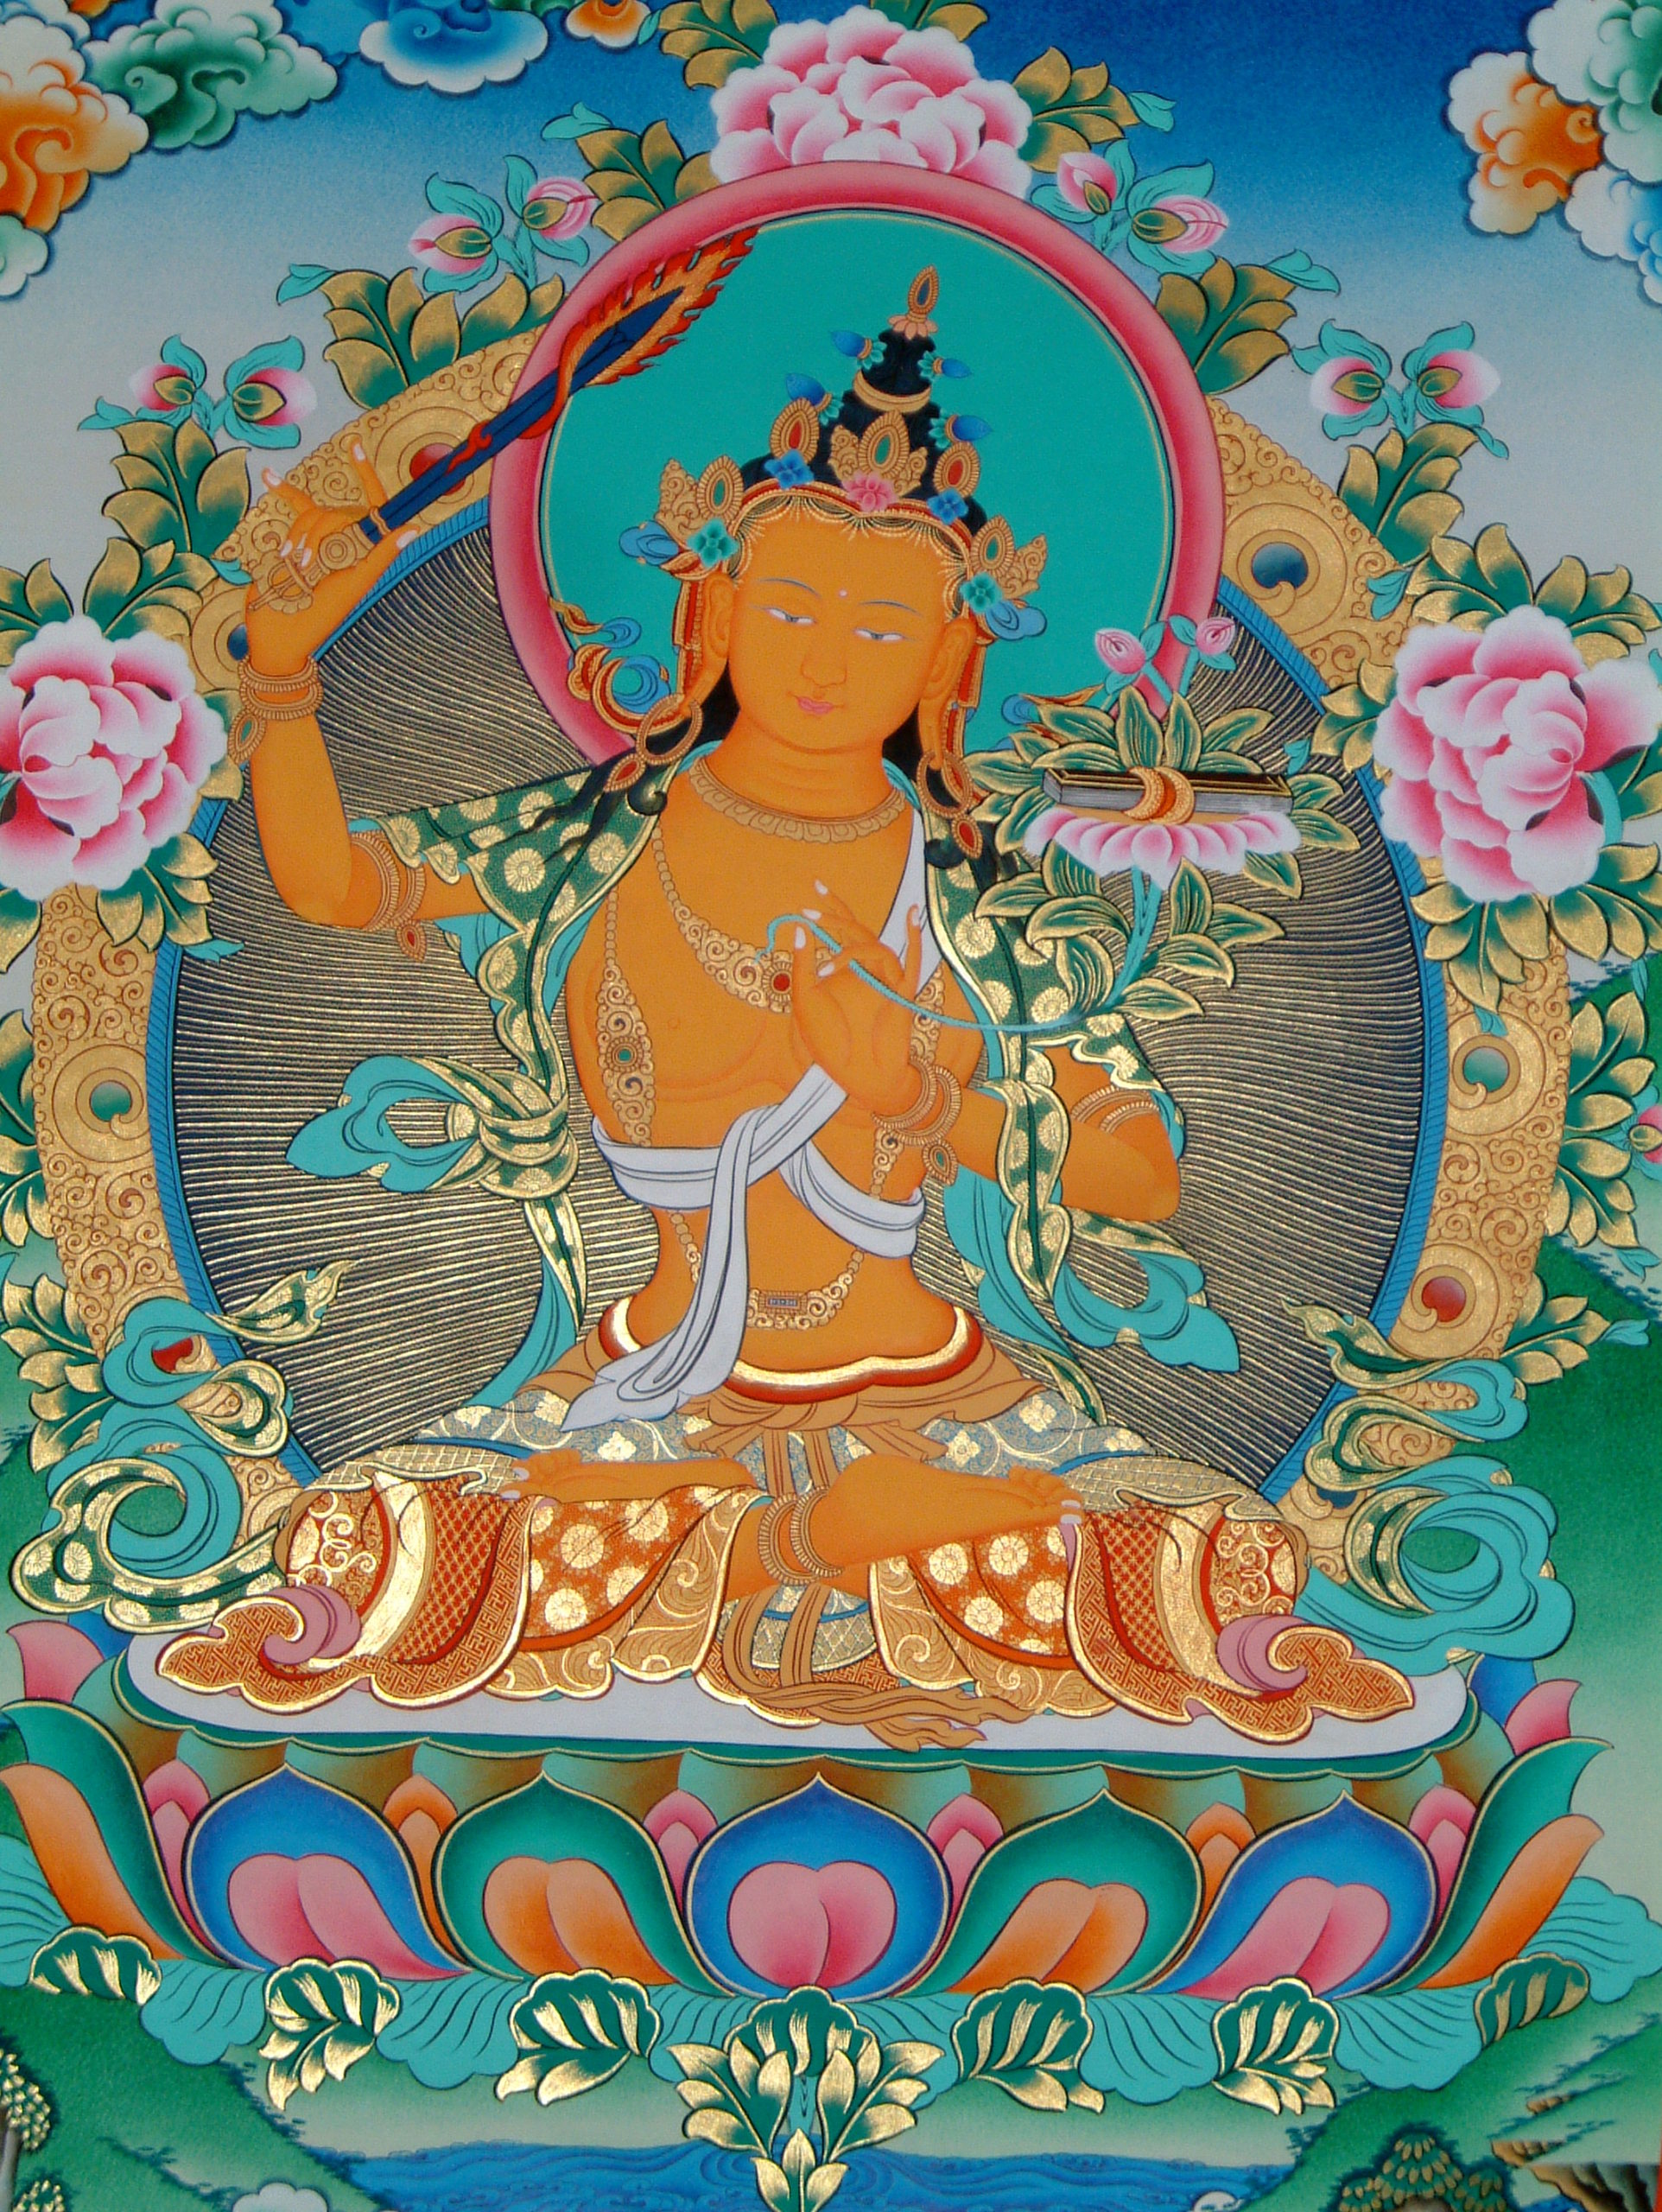 A Meditation on Orange Manjushri
https://fpmt.org/edu-news/a-meditation-on-orange-manjushri/